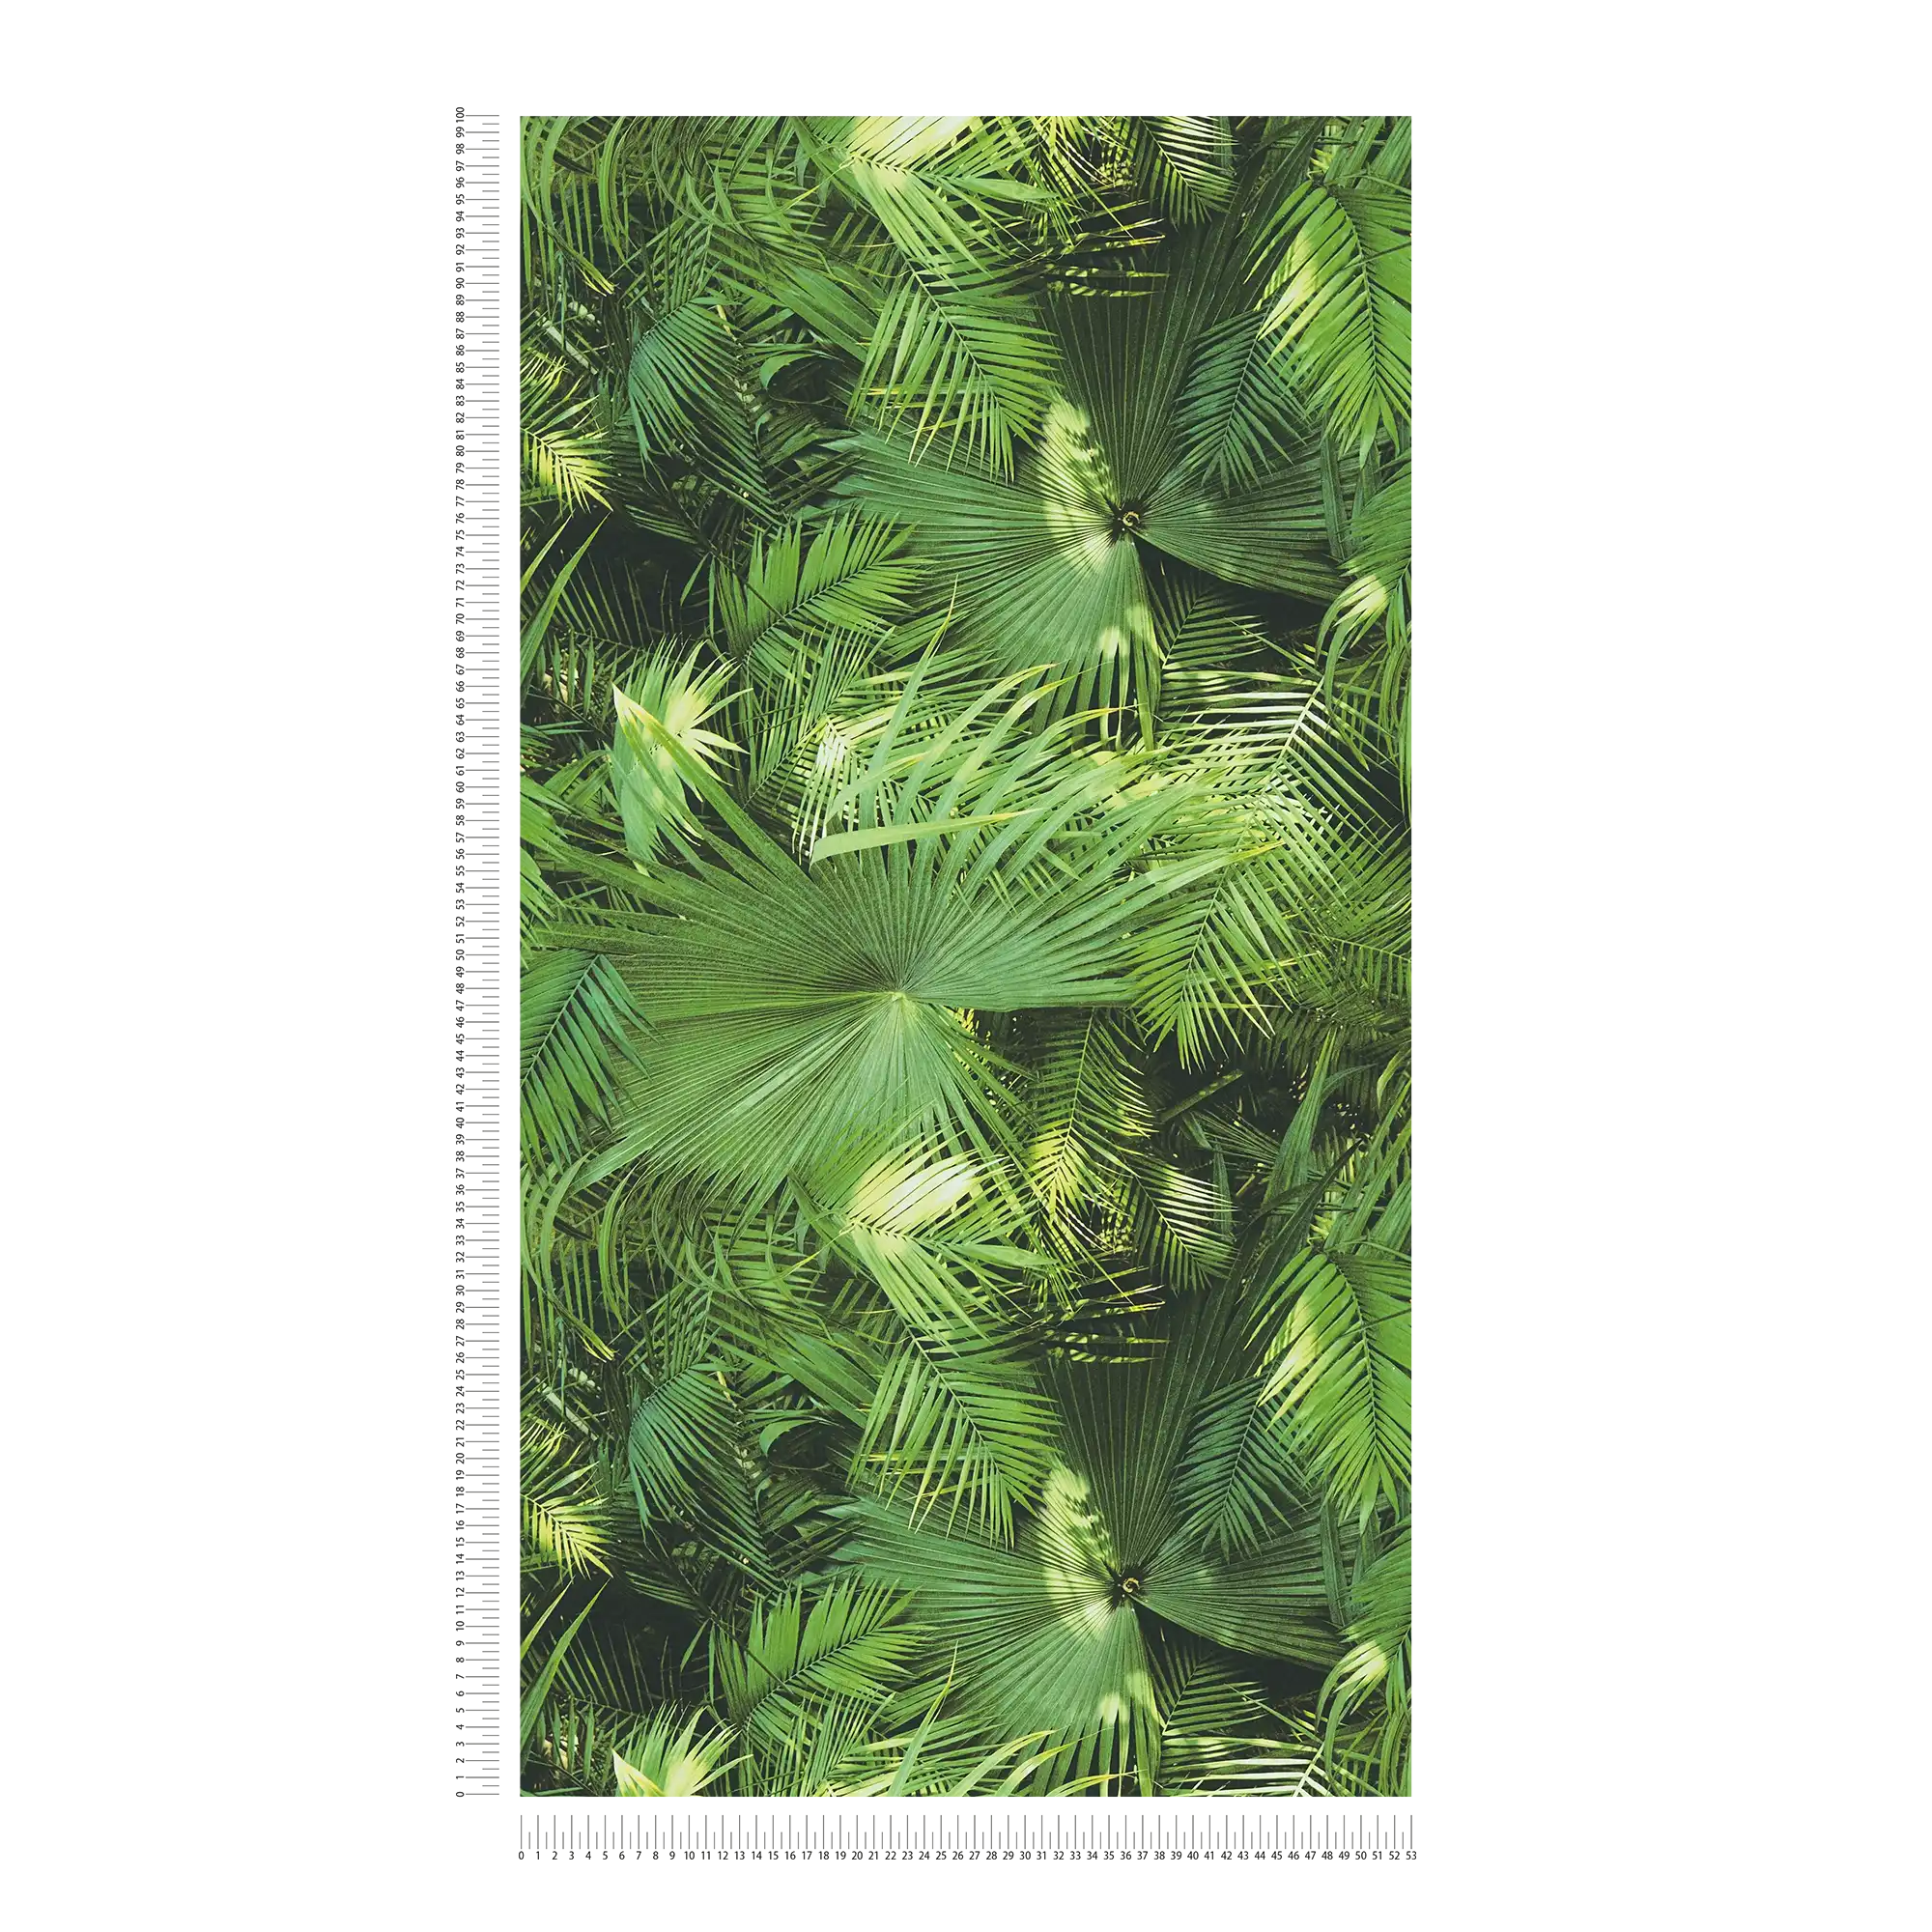             Self-adhesive wallpaper | jungle leaves pattern green jungle
        